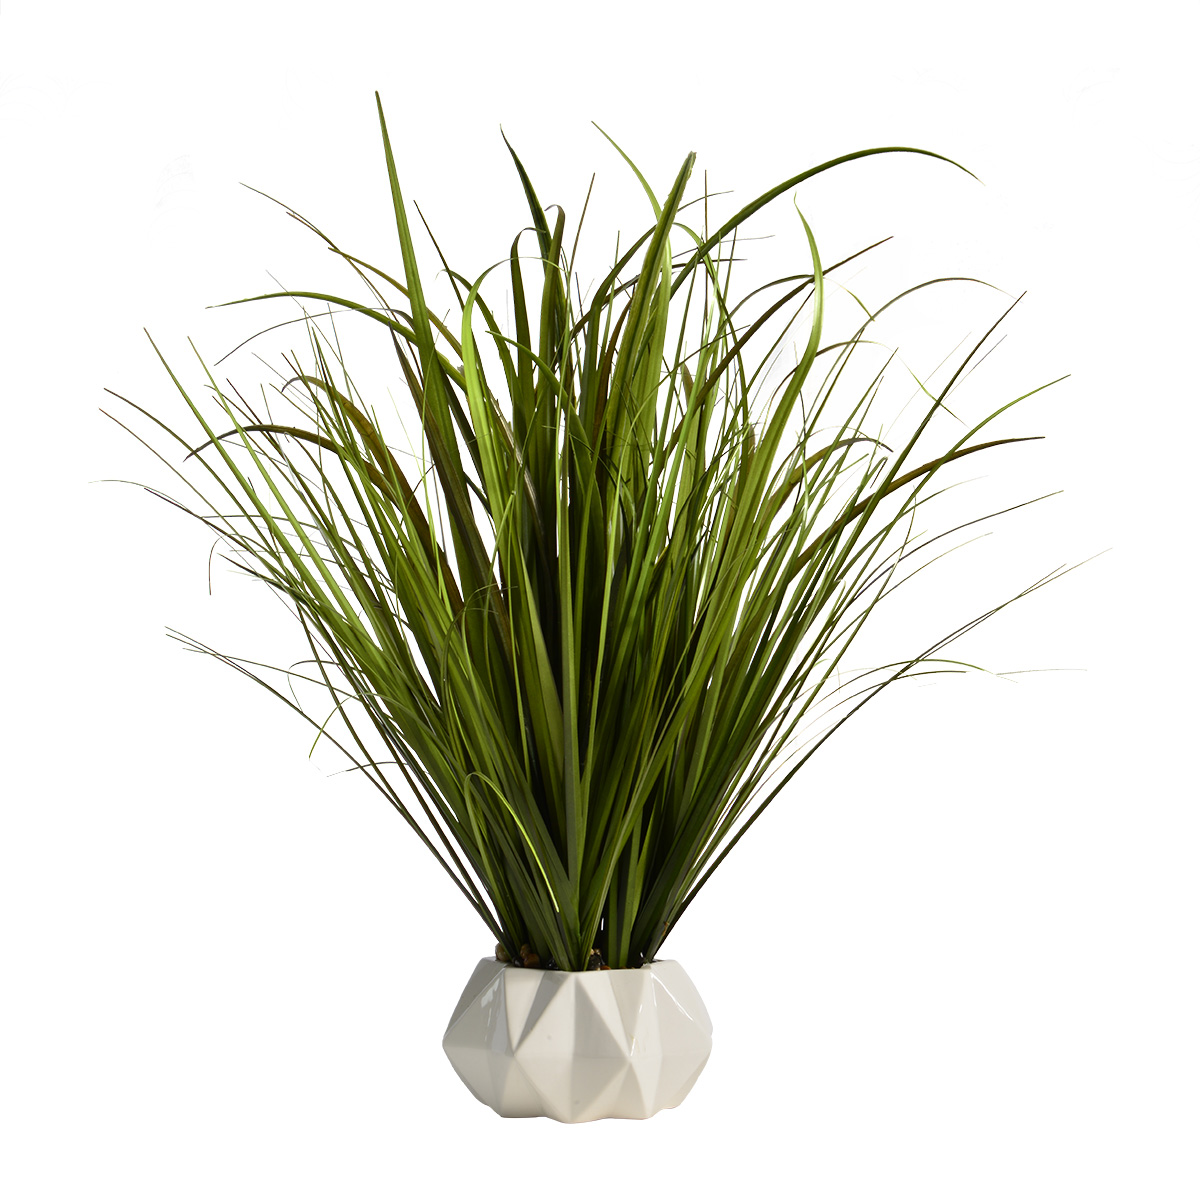 Vha102479 Plastic Grass In Ceramic Vase